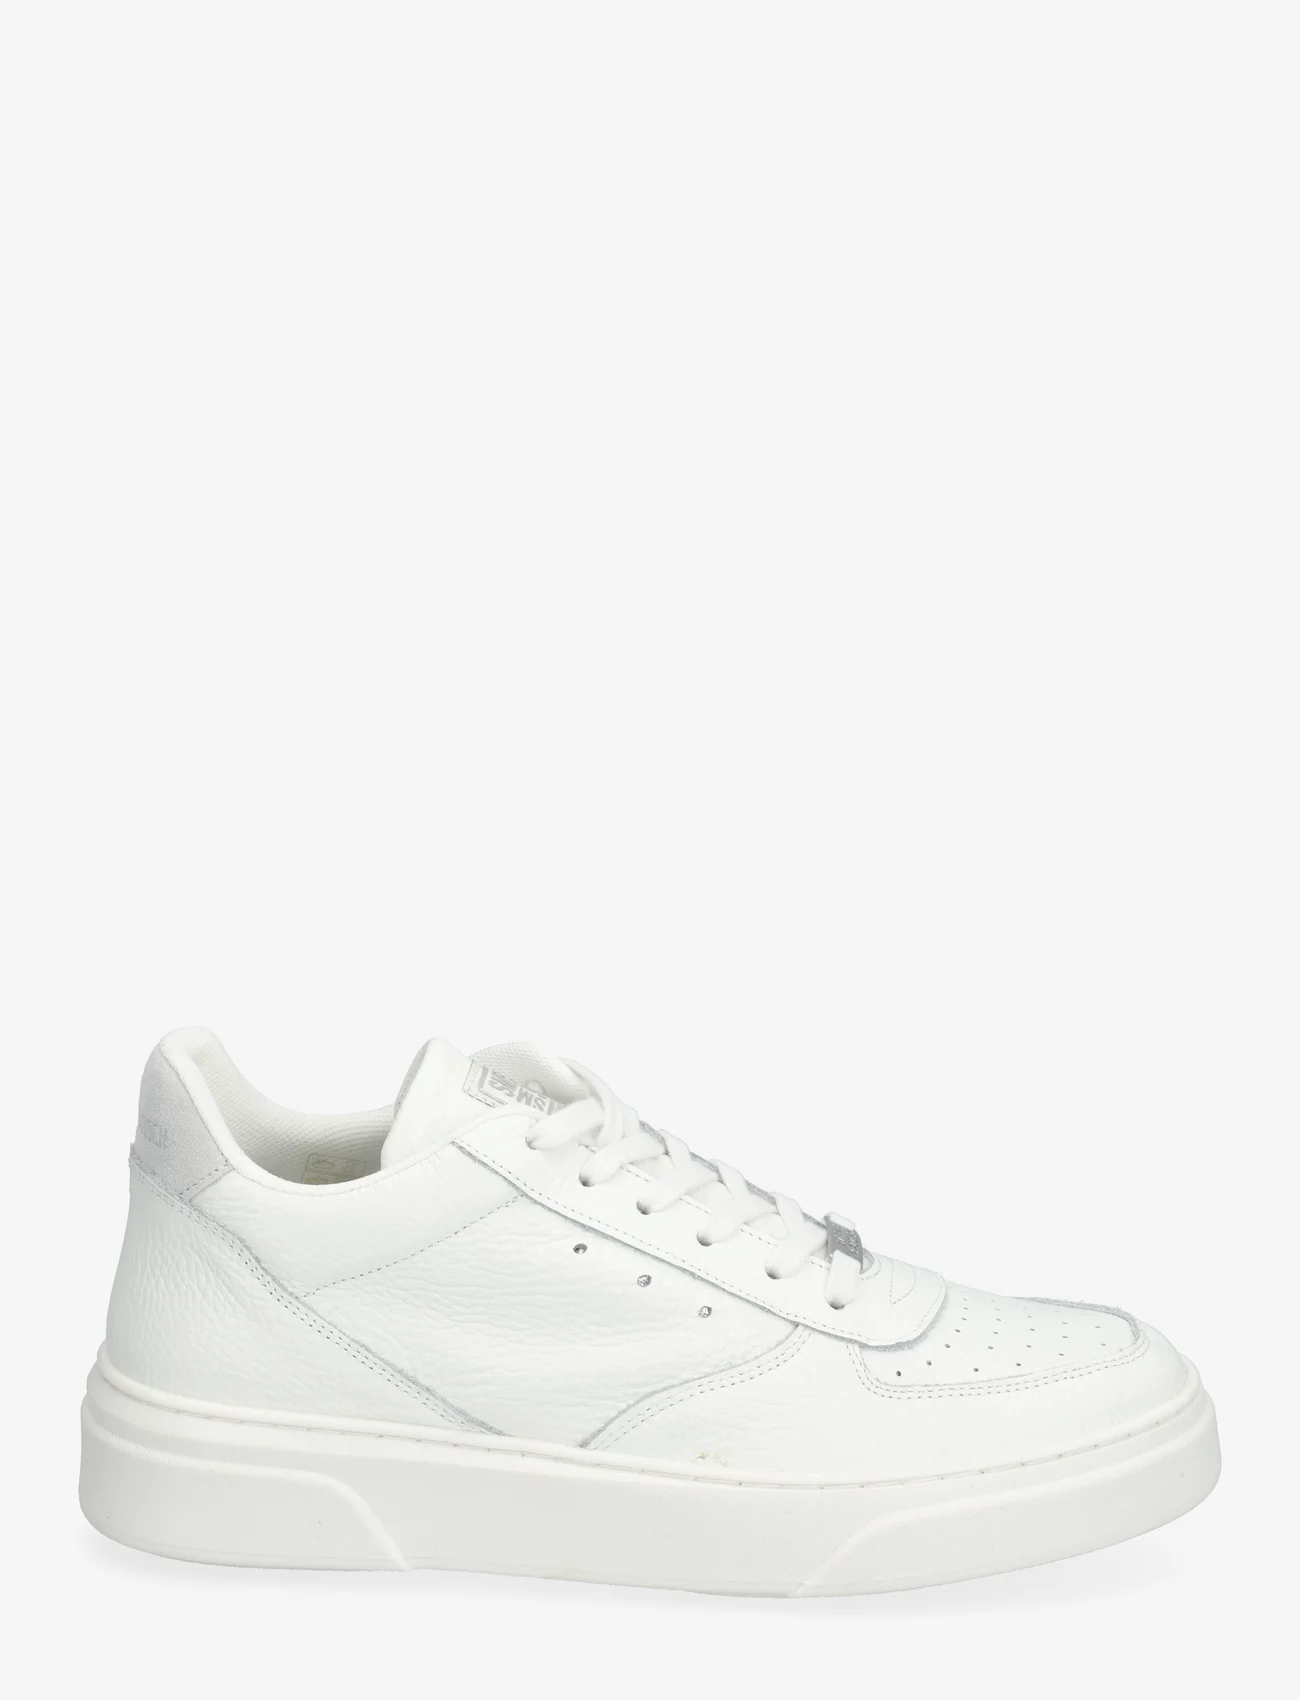 Steve Madden - Brent Sneaker - laisvalaikio batai žemu aulu - white leather - 1